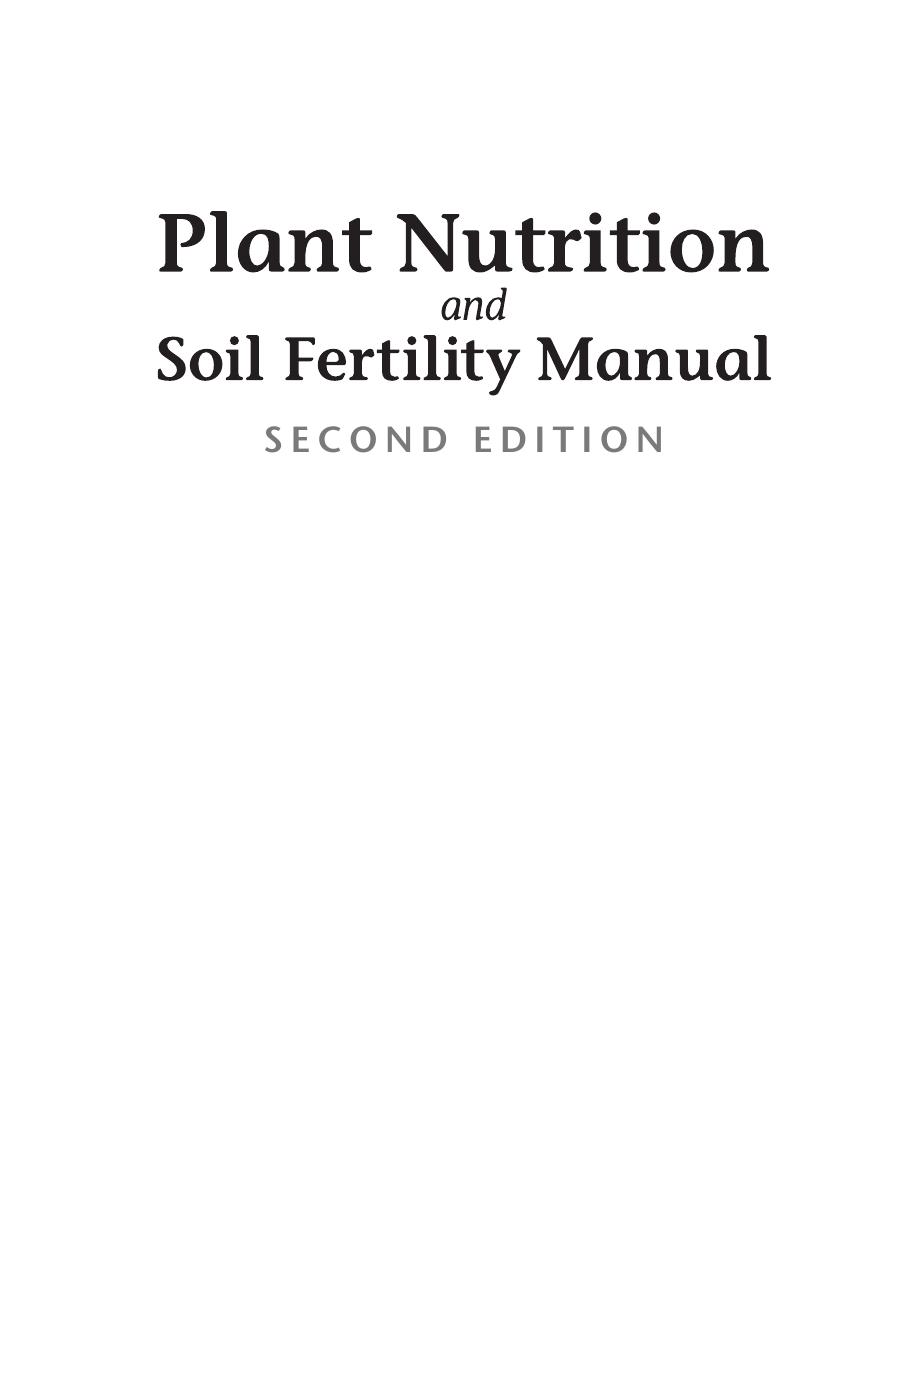 Plant nutrition and soil fertility manual ( PDFDrive ), 2012